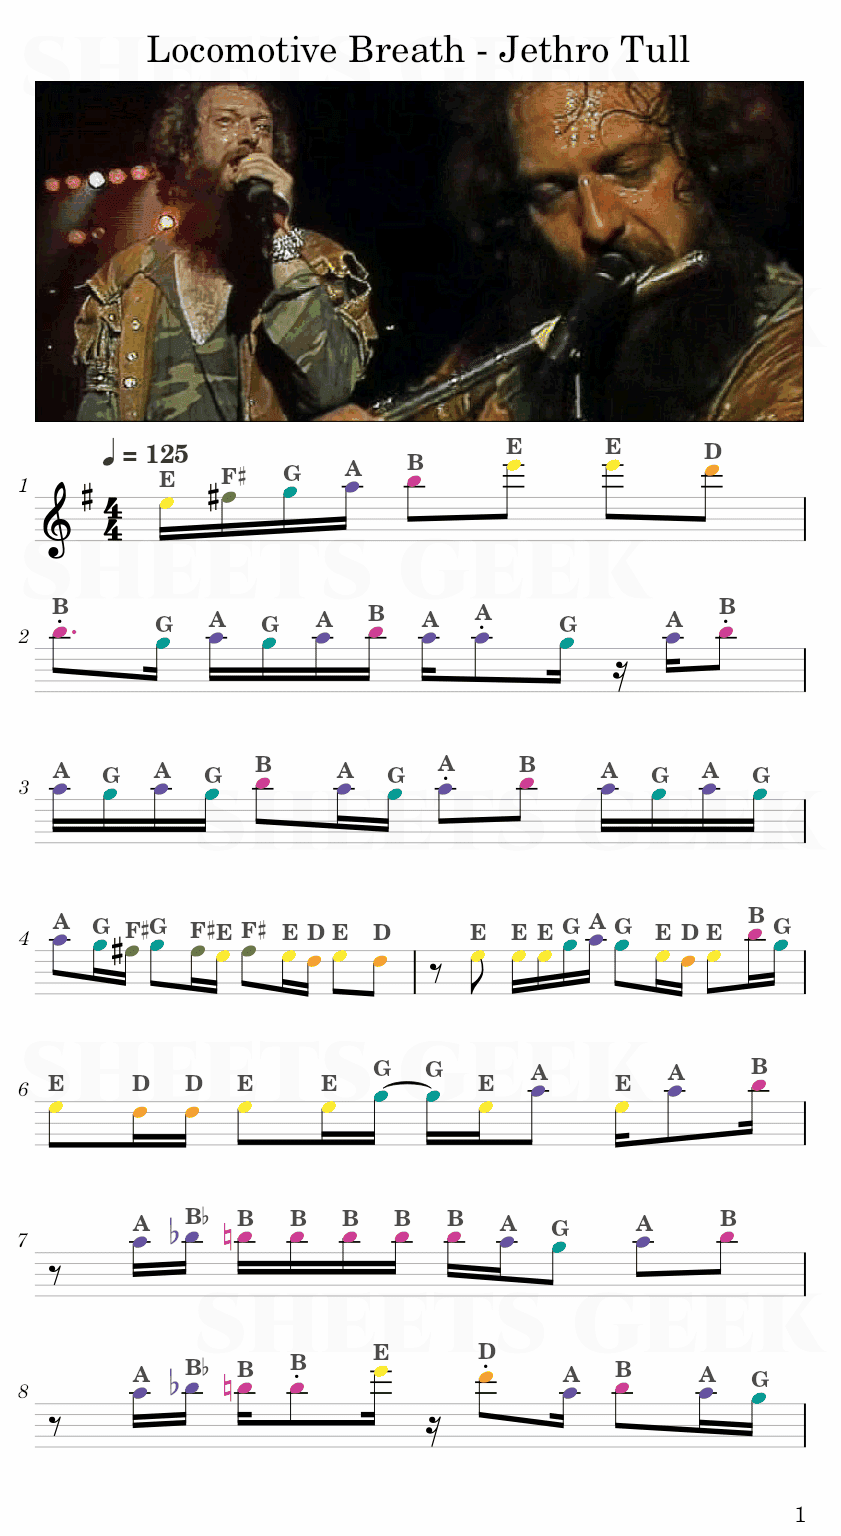 Locomotive Breath - Jethro Tull Easy Sheets Music Free for piano, keyboard, flute, violin, sax, celllo 1